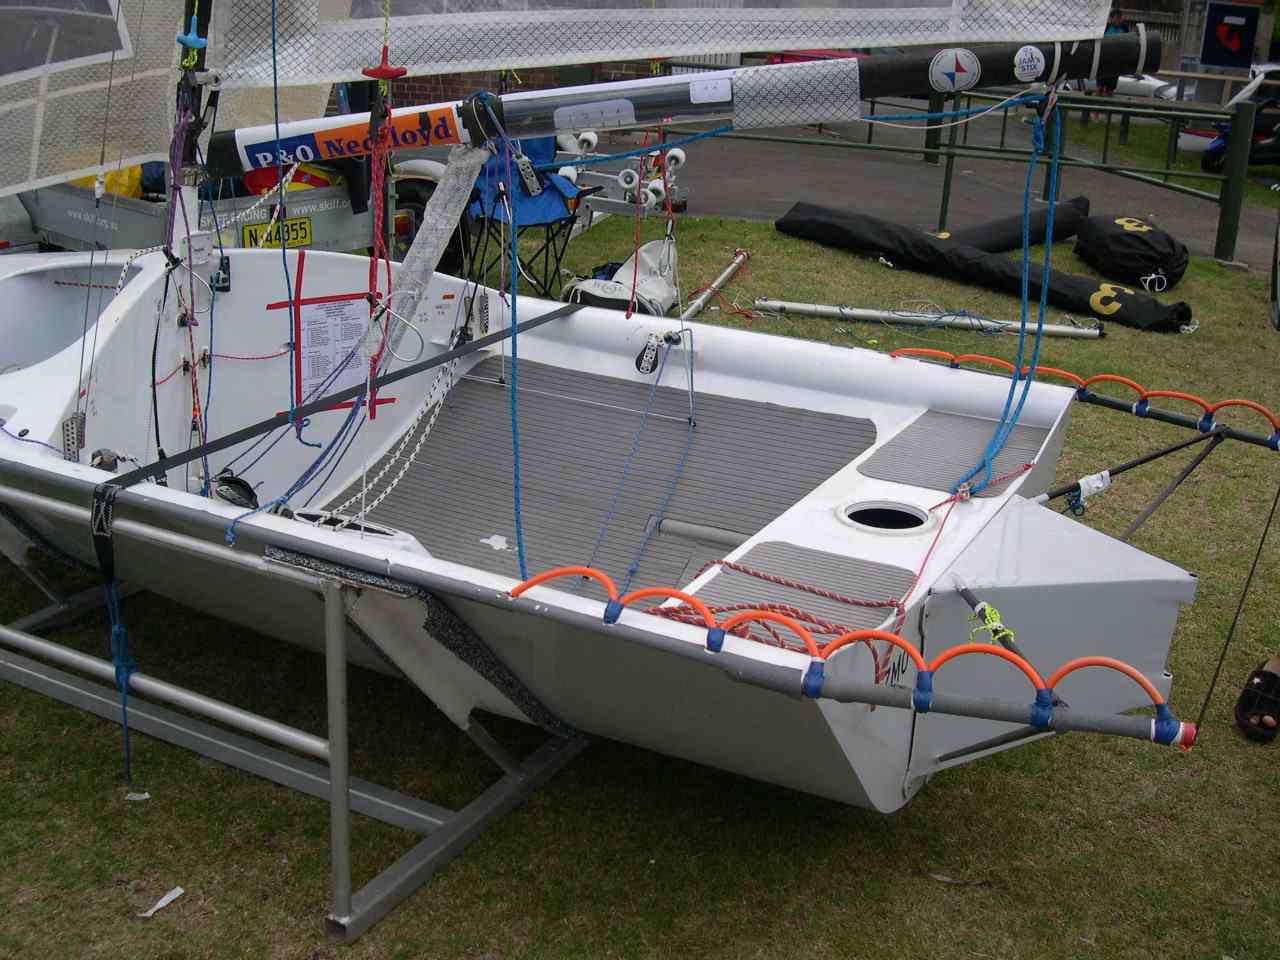 12-foot skiff - simple and functional